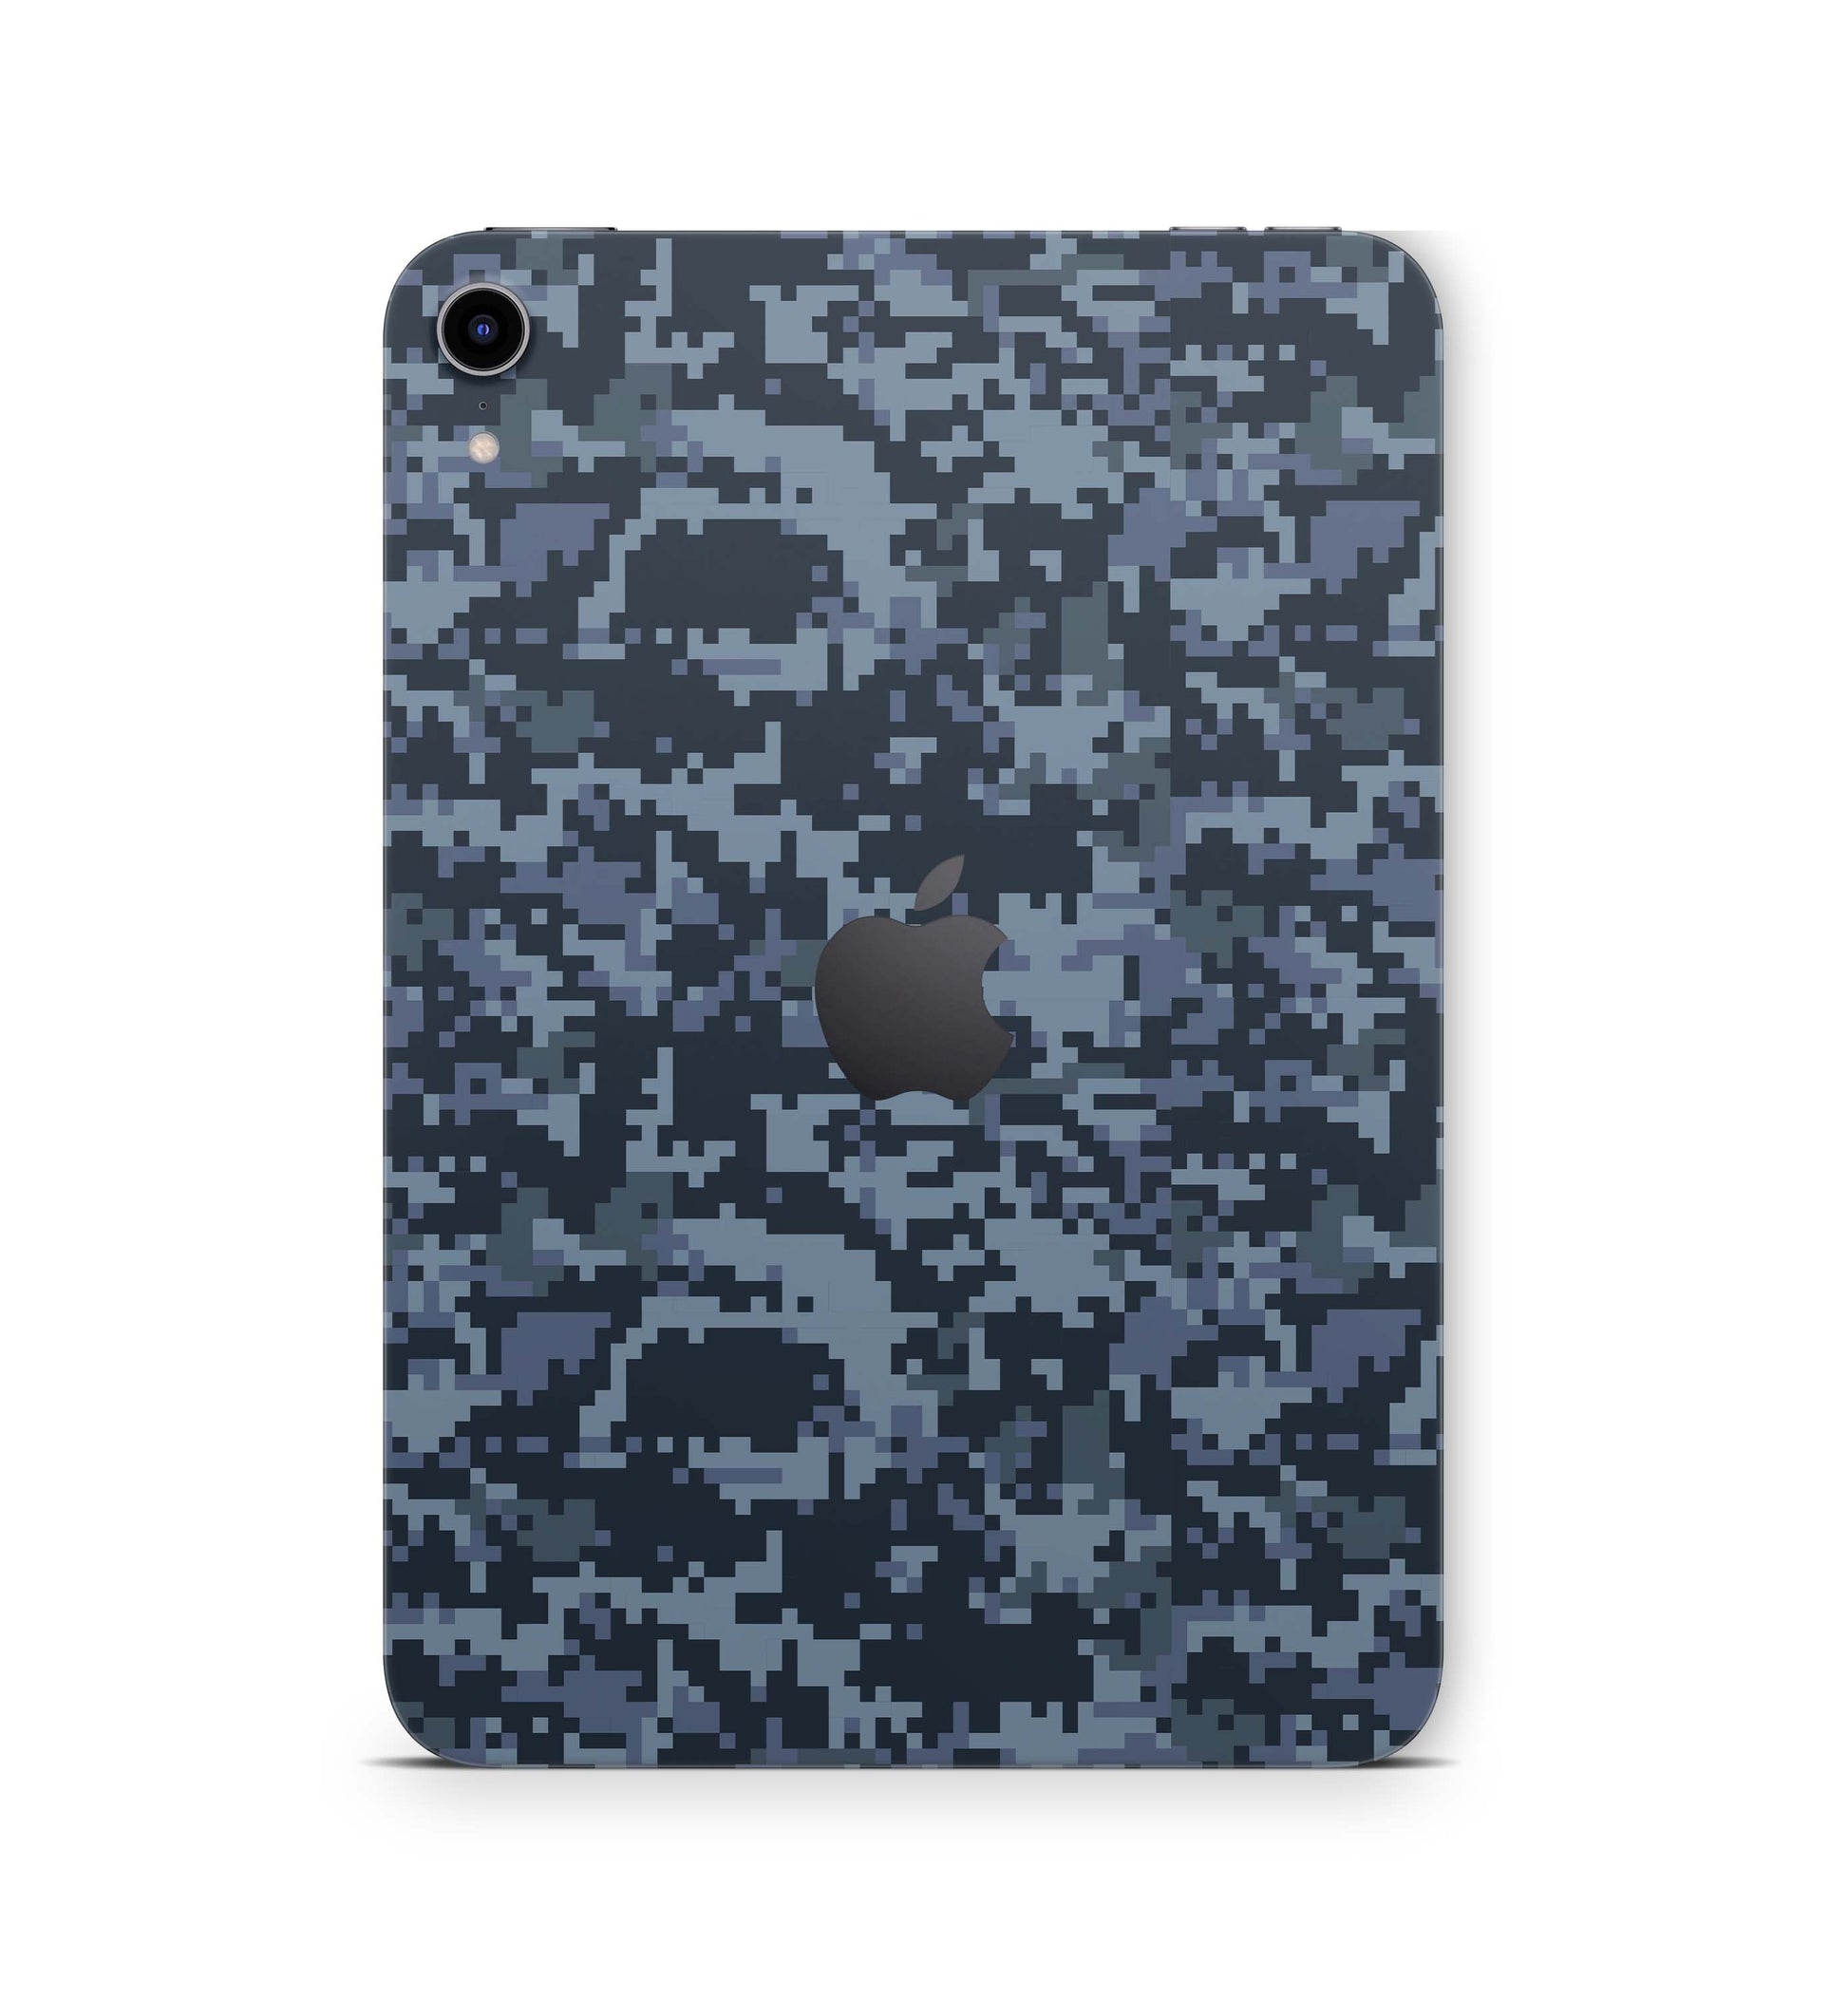 iPad Air Skin Design Cover Folie Vinyl Skins & Wraps für alle iPad Air Modelle Aufkleber Skins4u Navy-Camo  